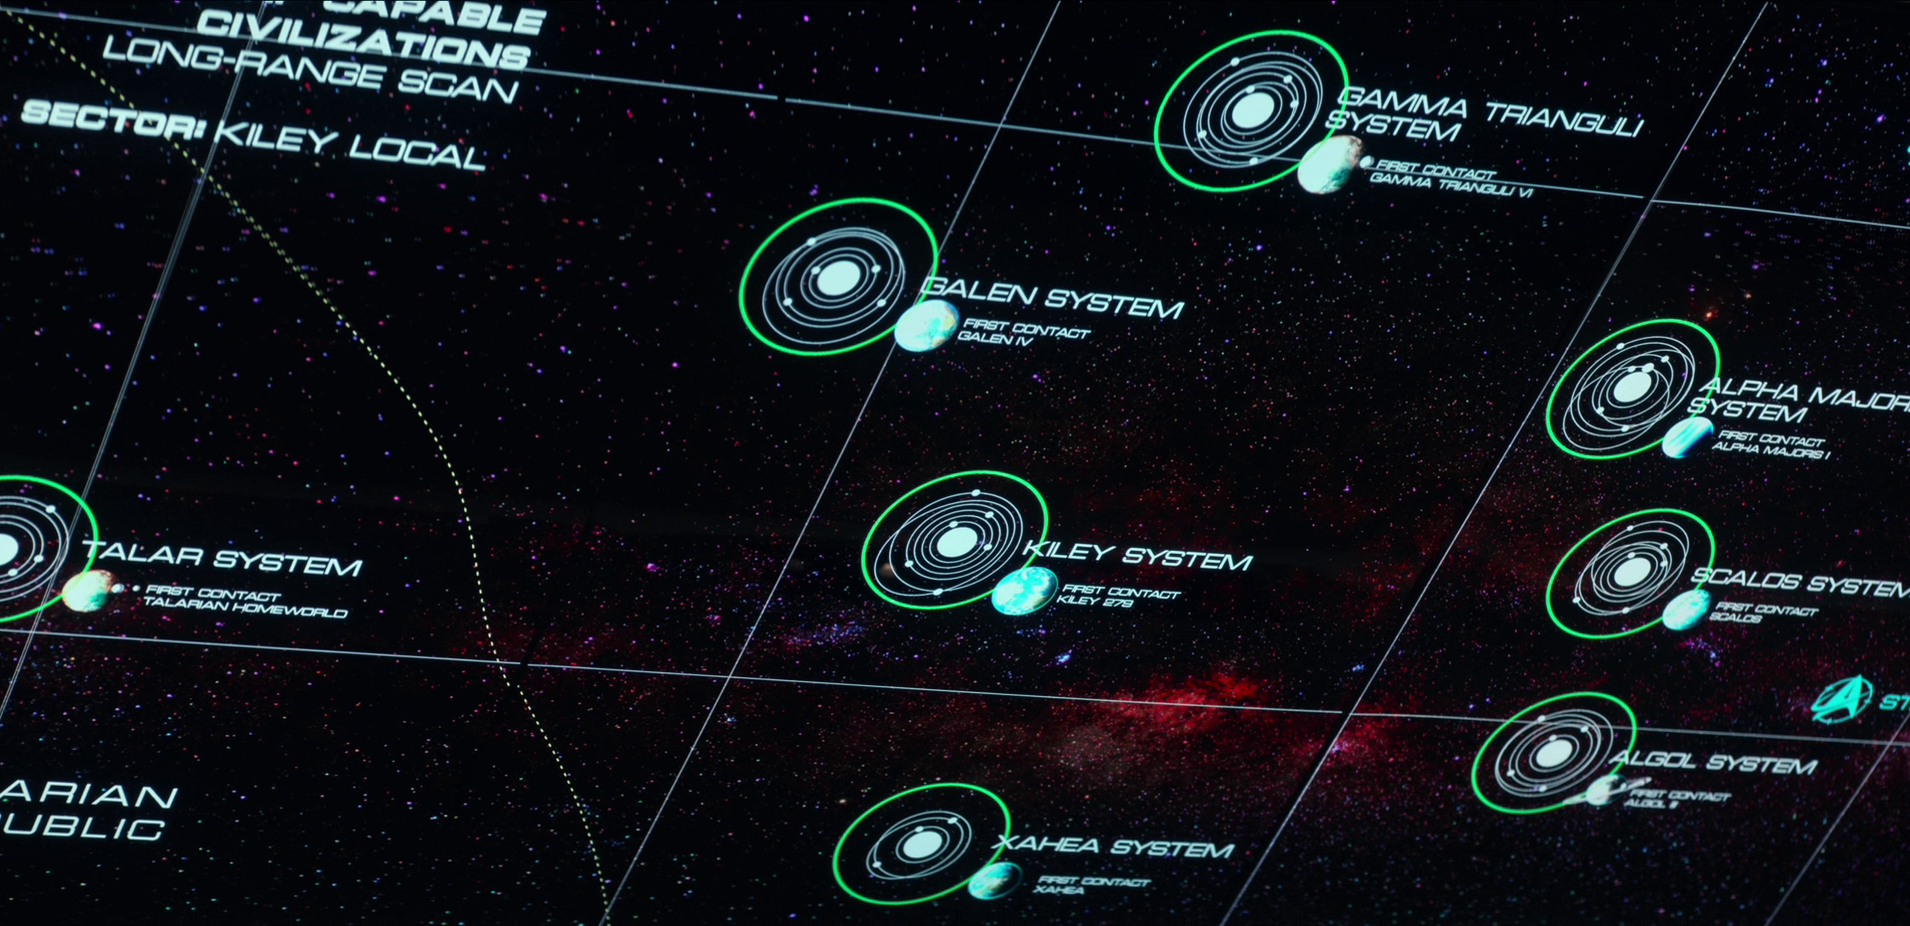 Il vicinato cosmico del Sistema KileyP37